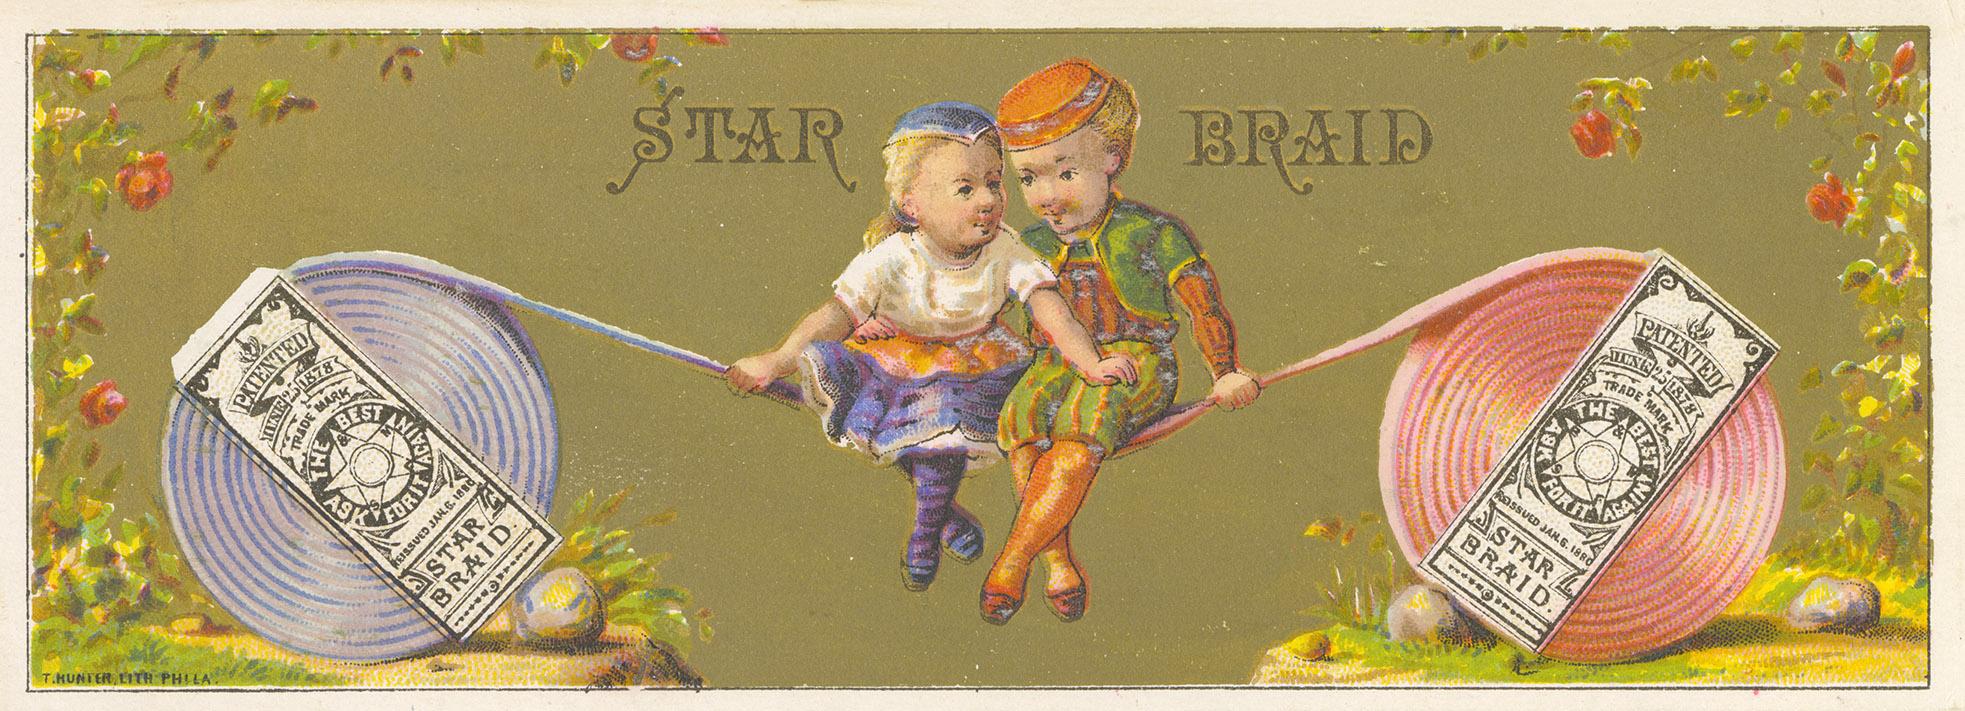 Couple on a Star Braid swing